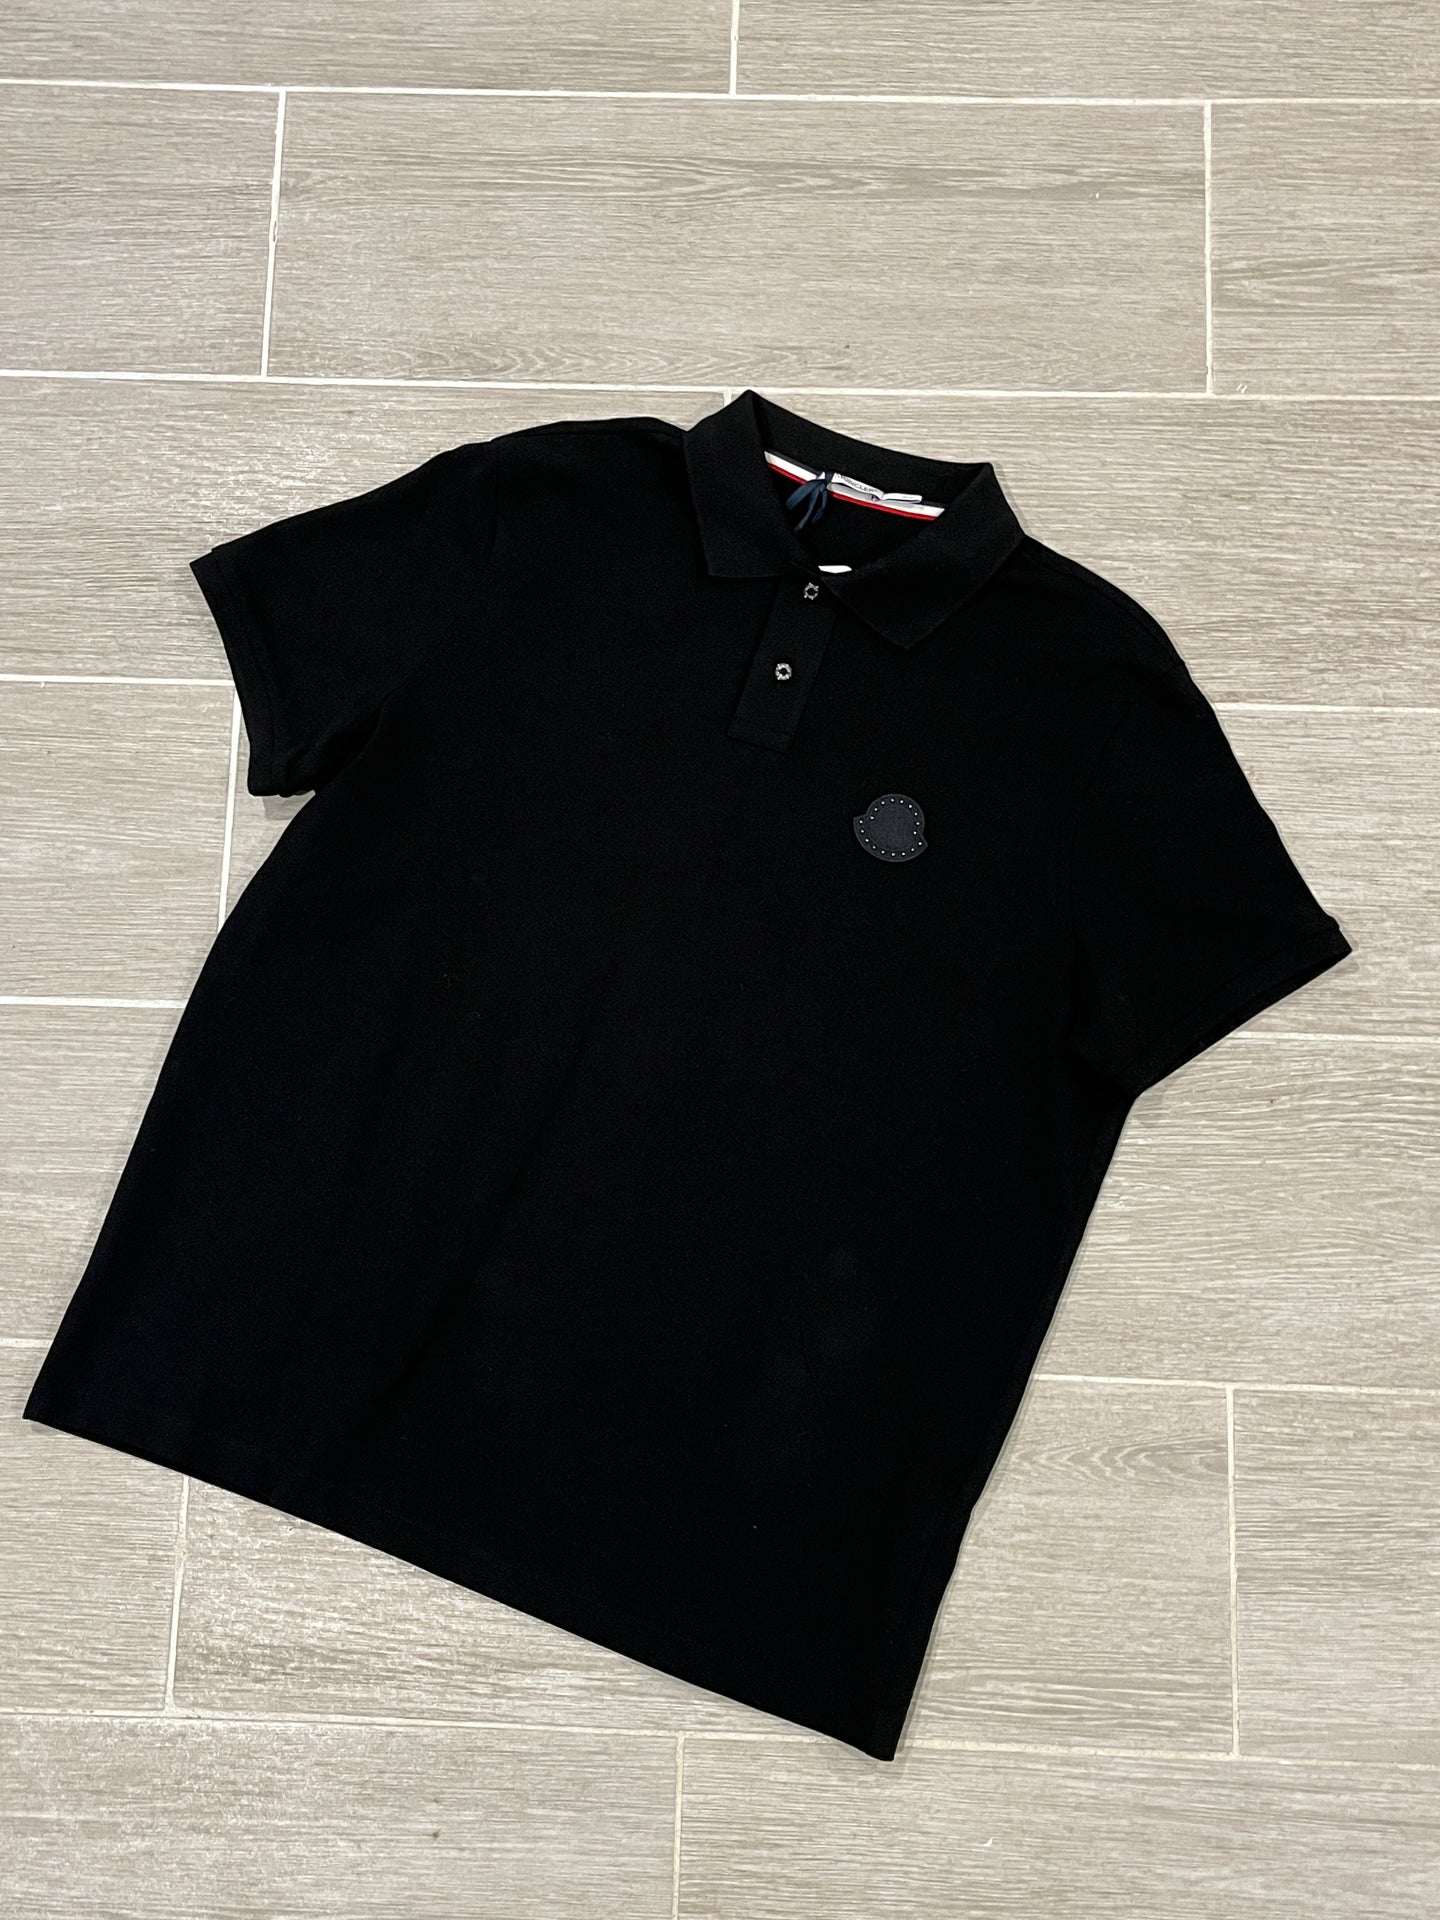 Moncler Black Polo Shirt